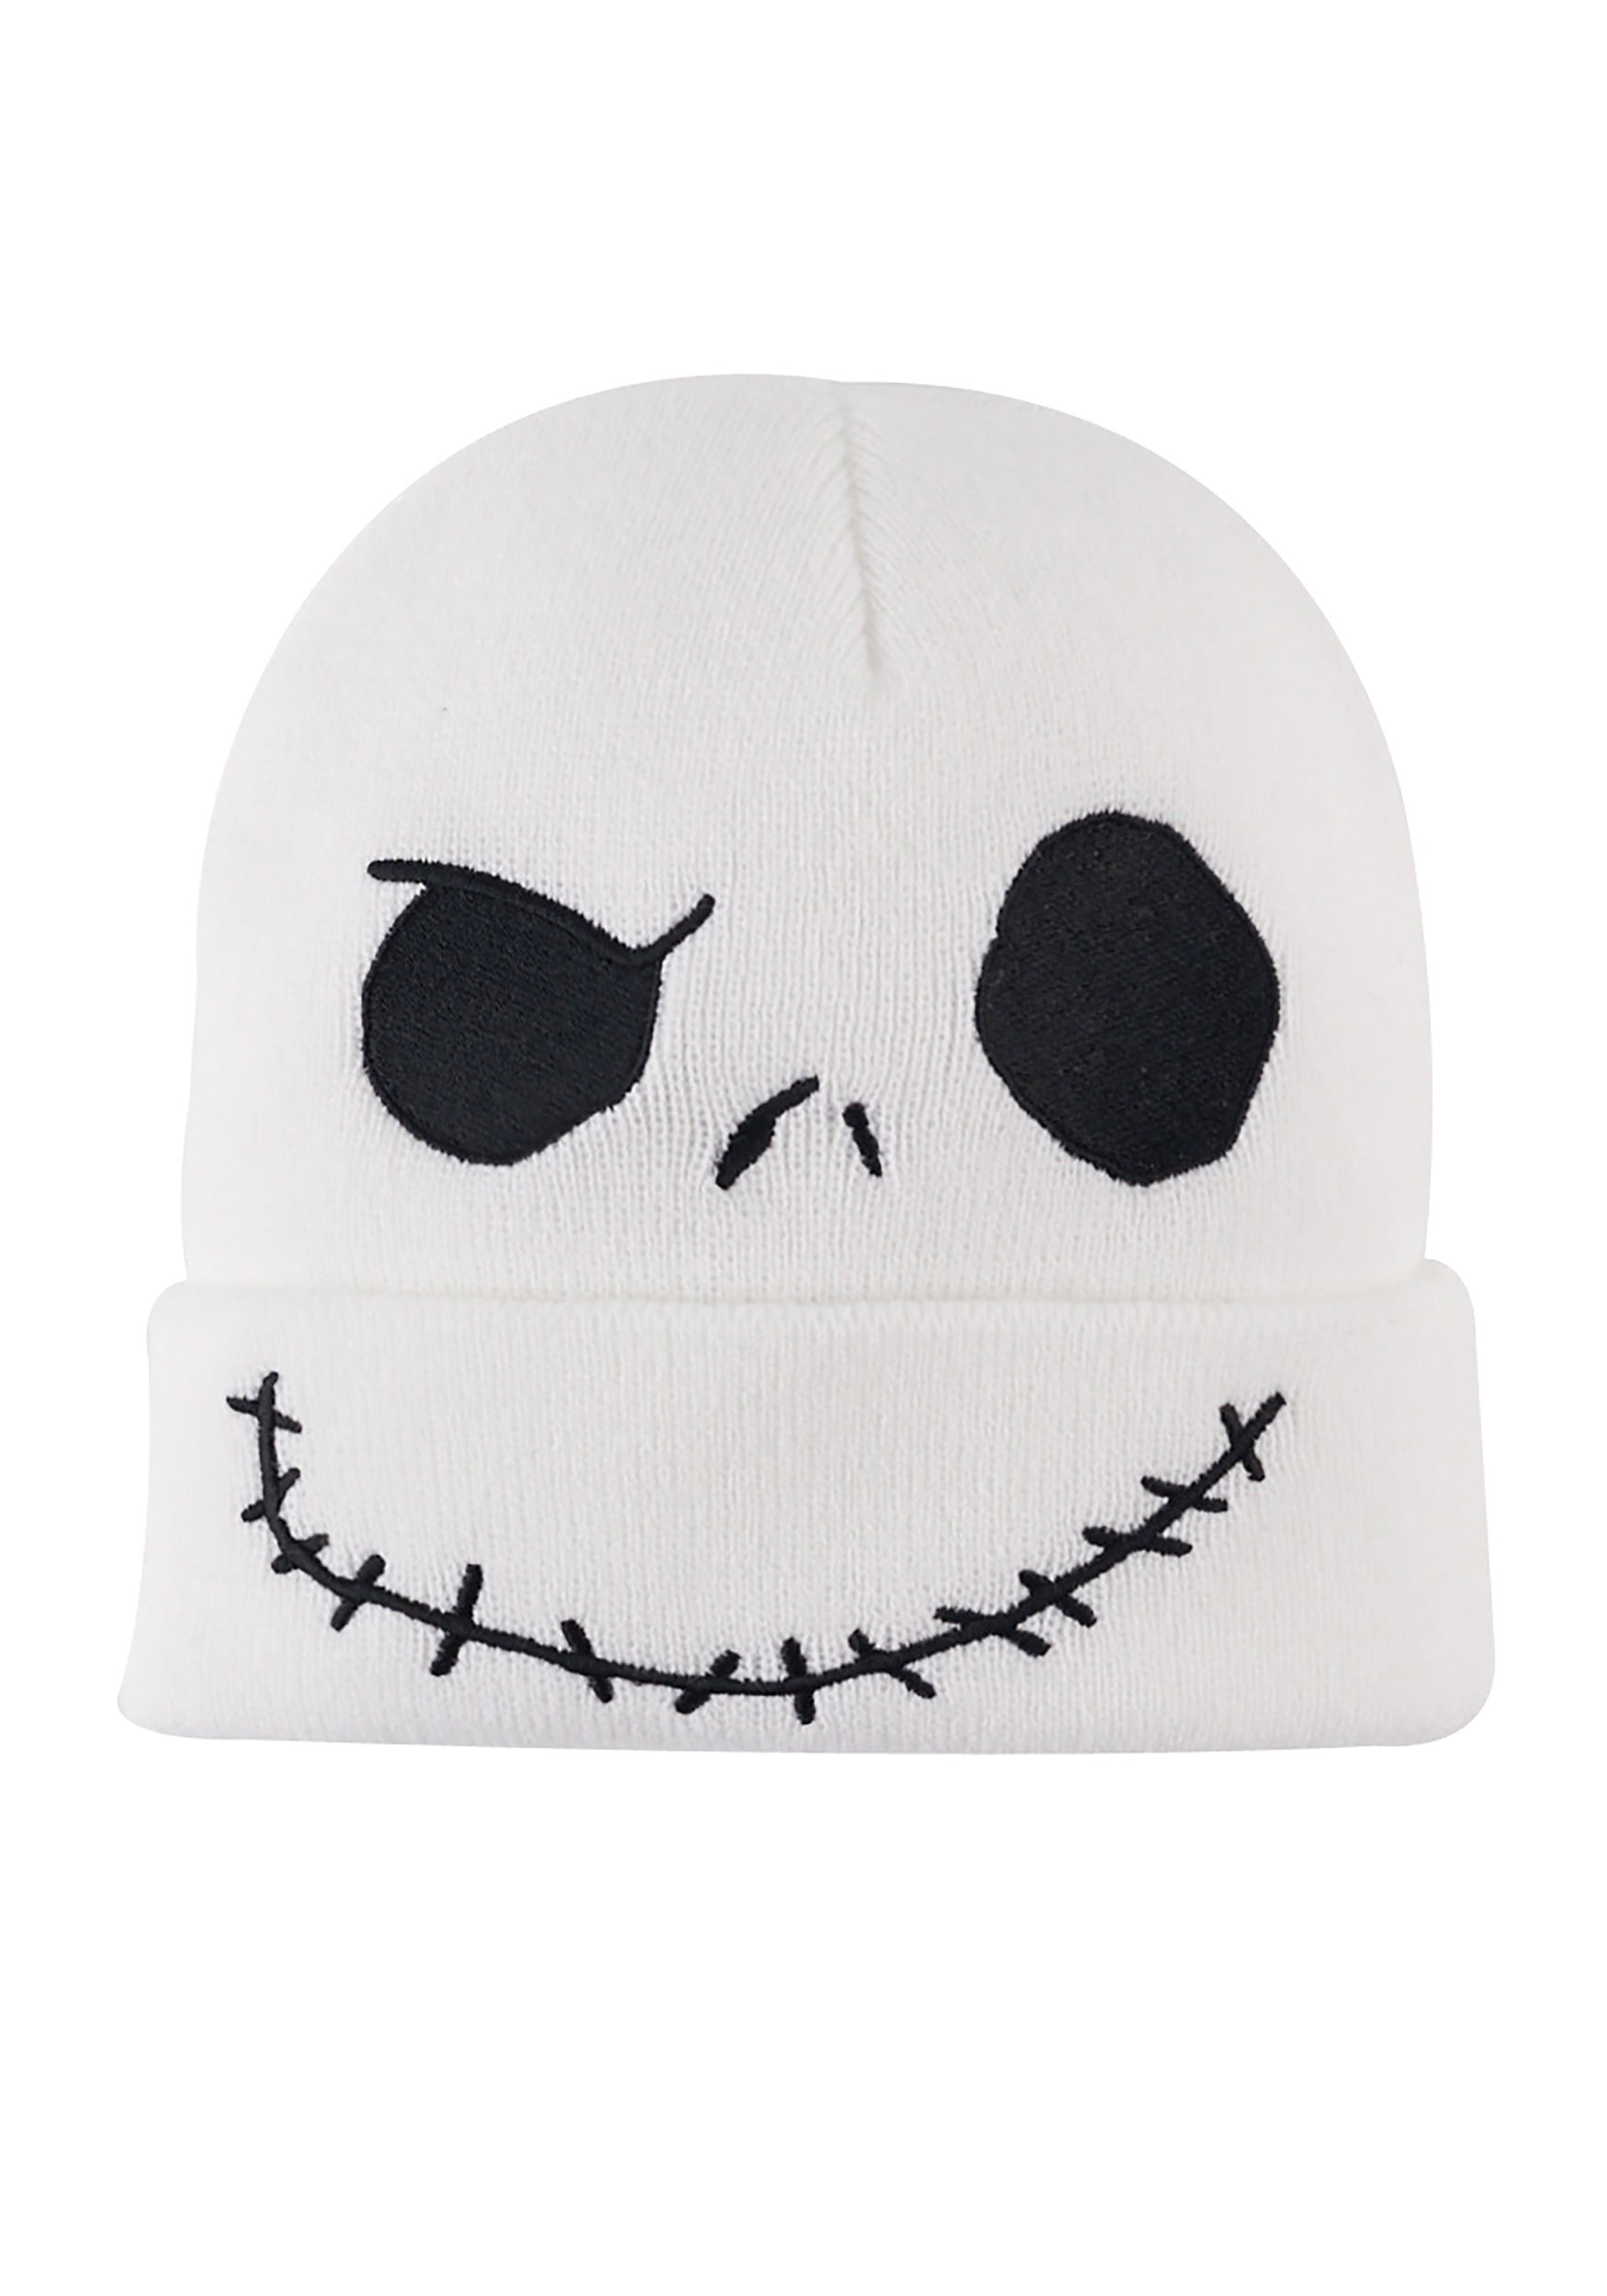 Jack Skeleton Nightmare Before Christmas Winter Knit Hat Cap Mask New OSFM 